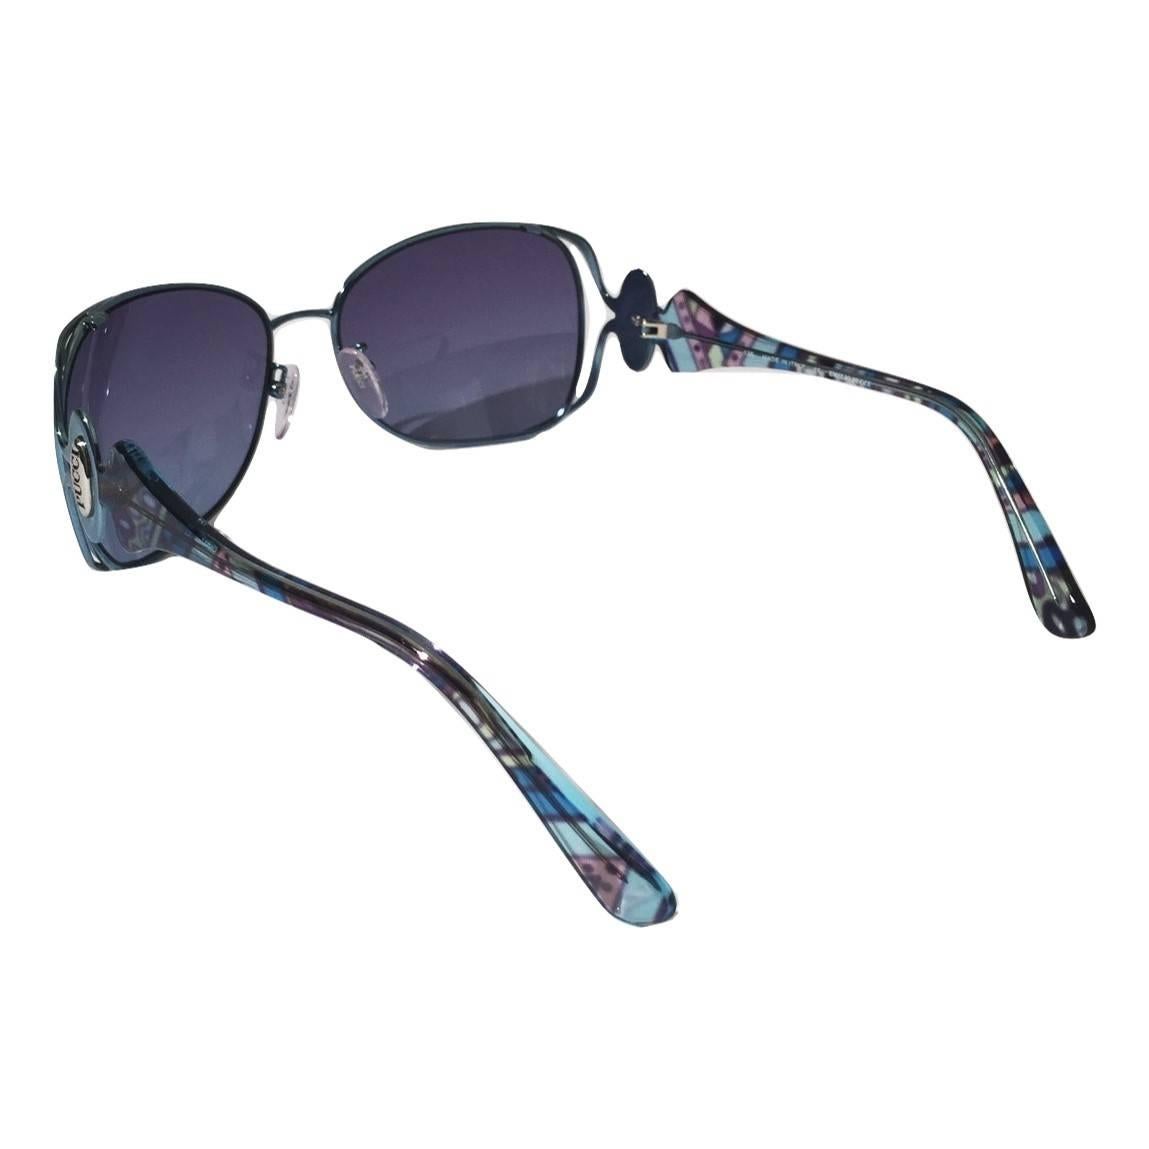 New Emilio Pucci Teal Blue Aviator Sunglasses With Case & Box 7